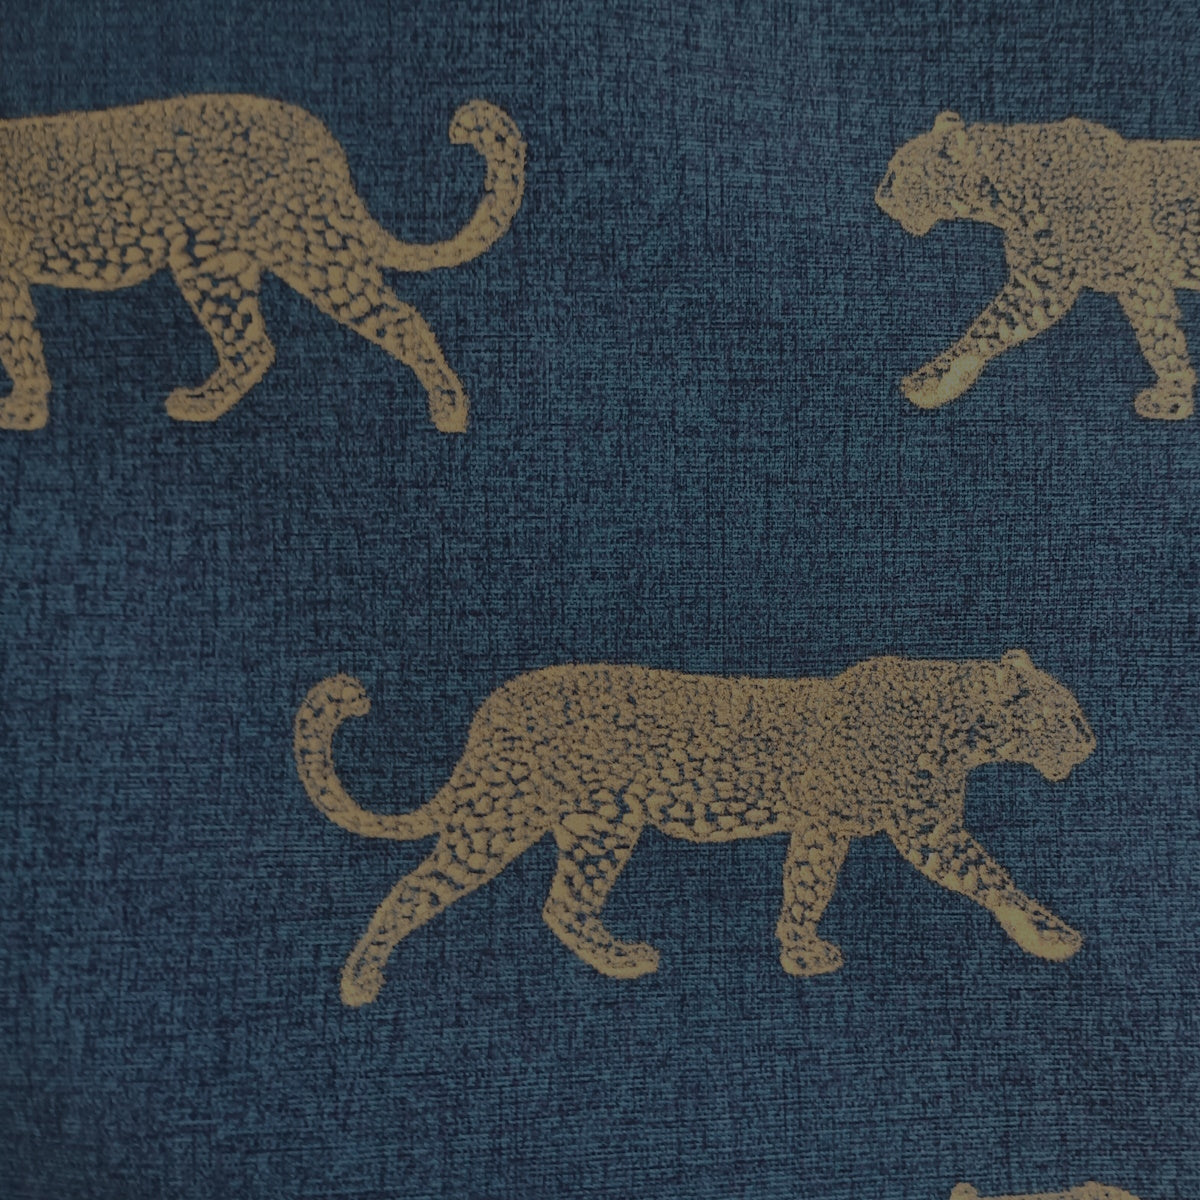 Leopard Print Upholstery Fabric Minou French Blue